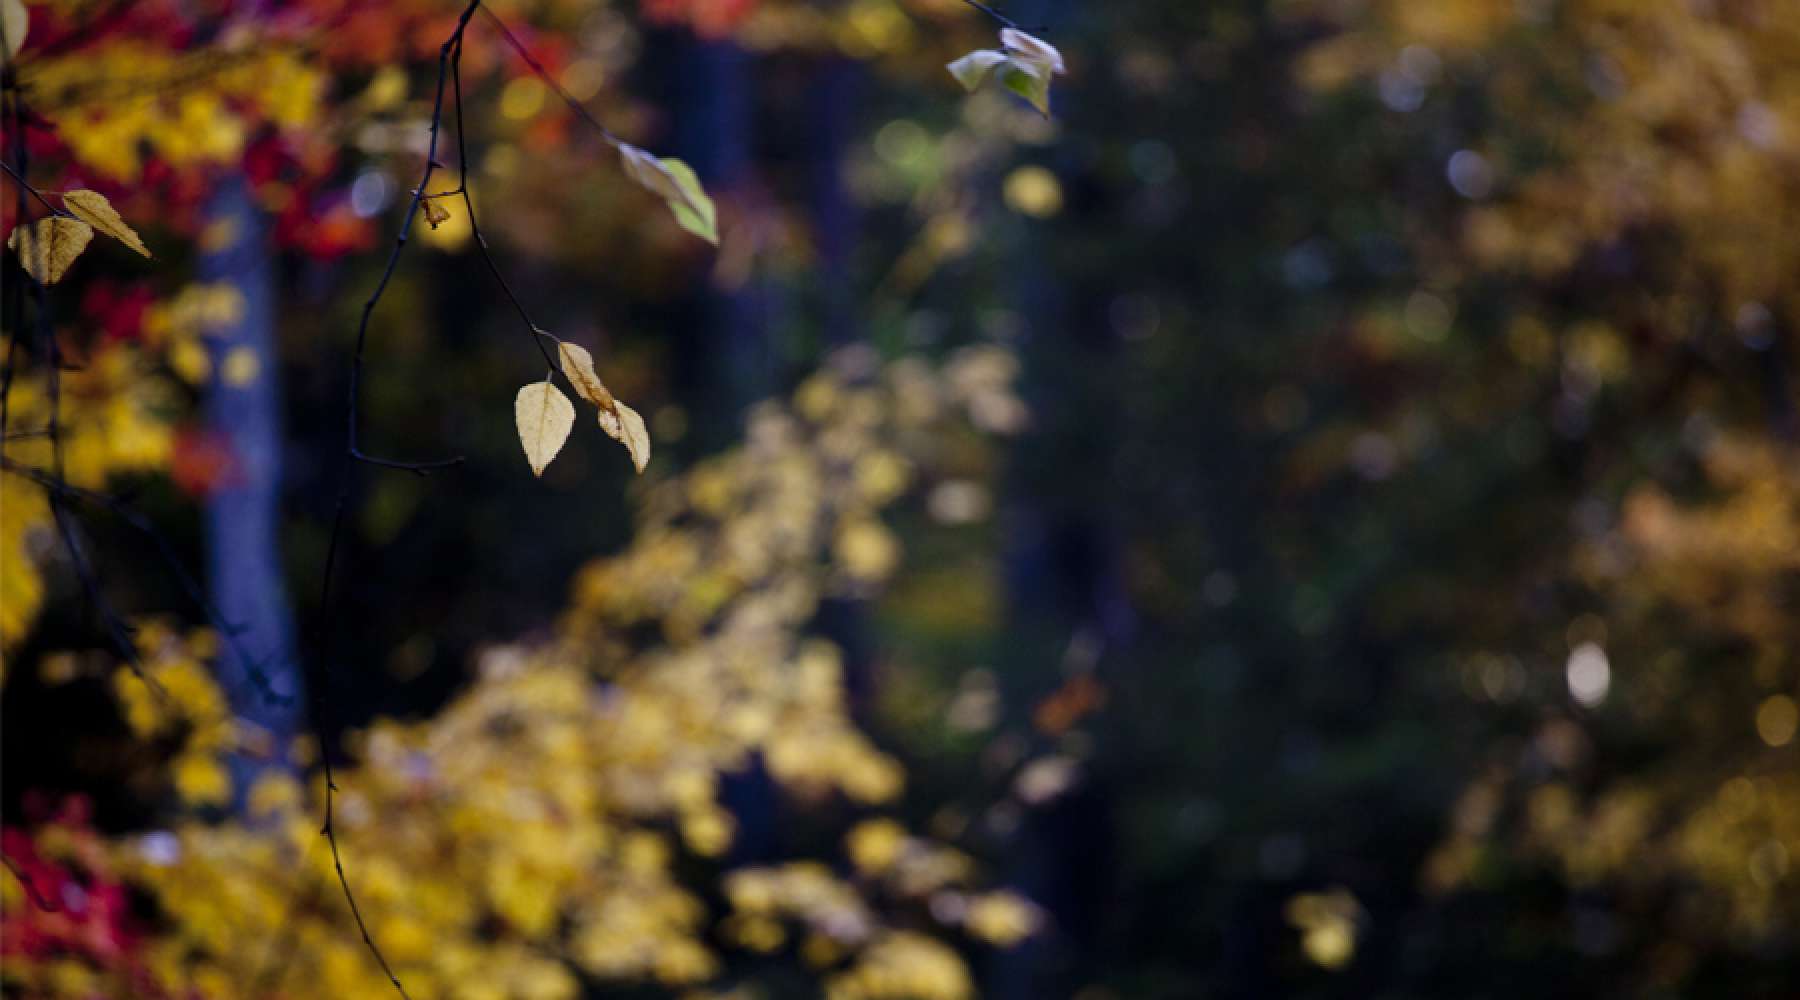 Fall-Scenic-Leaves-900-500.jpg